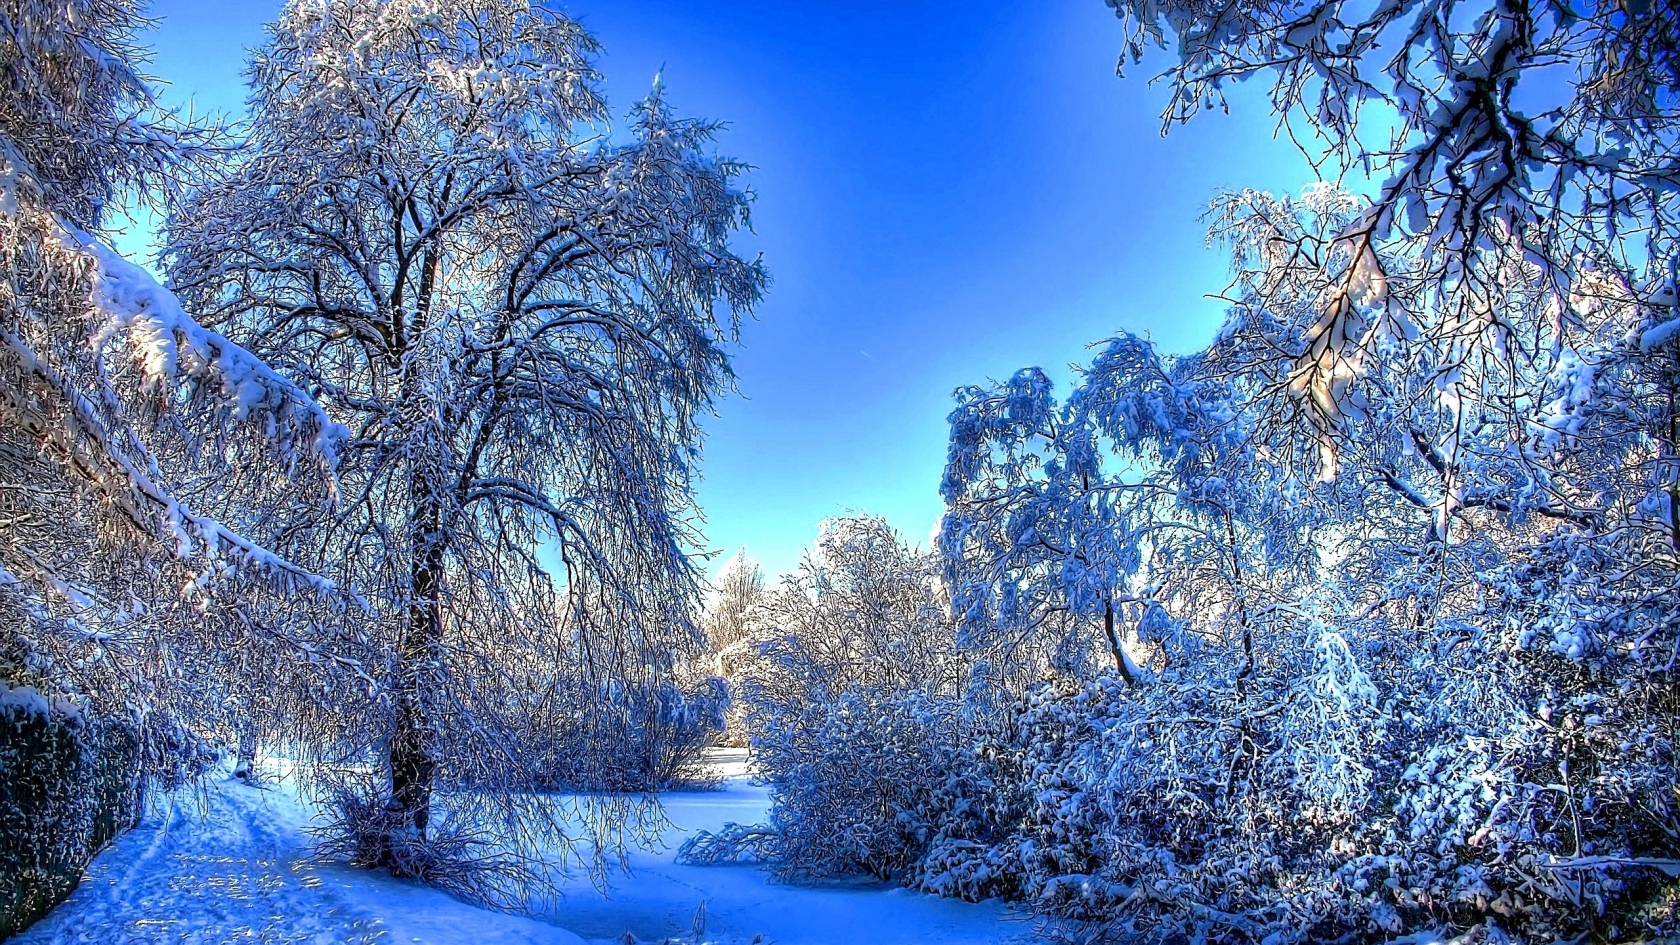 Winter Snow Landscape for 1680 x 945 HDTV resolution